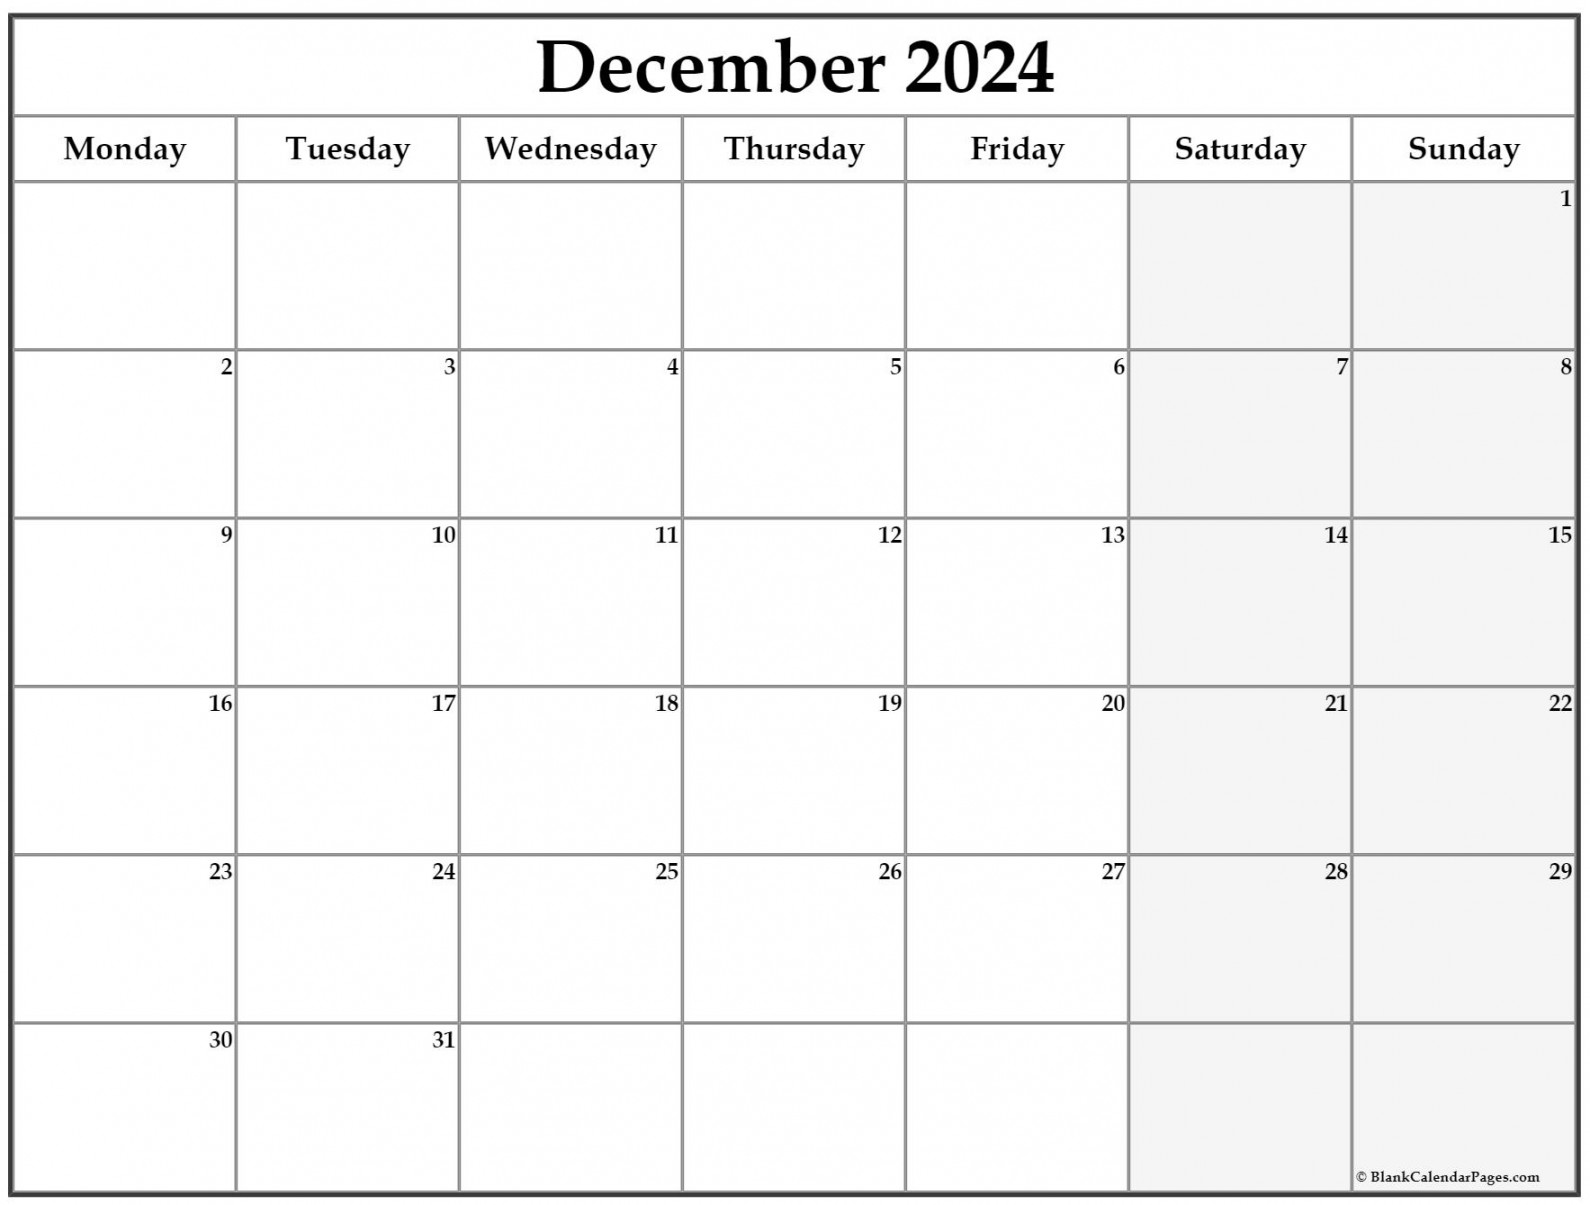 december monday calendar monday to sunday 2